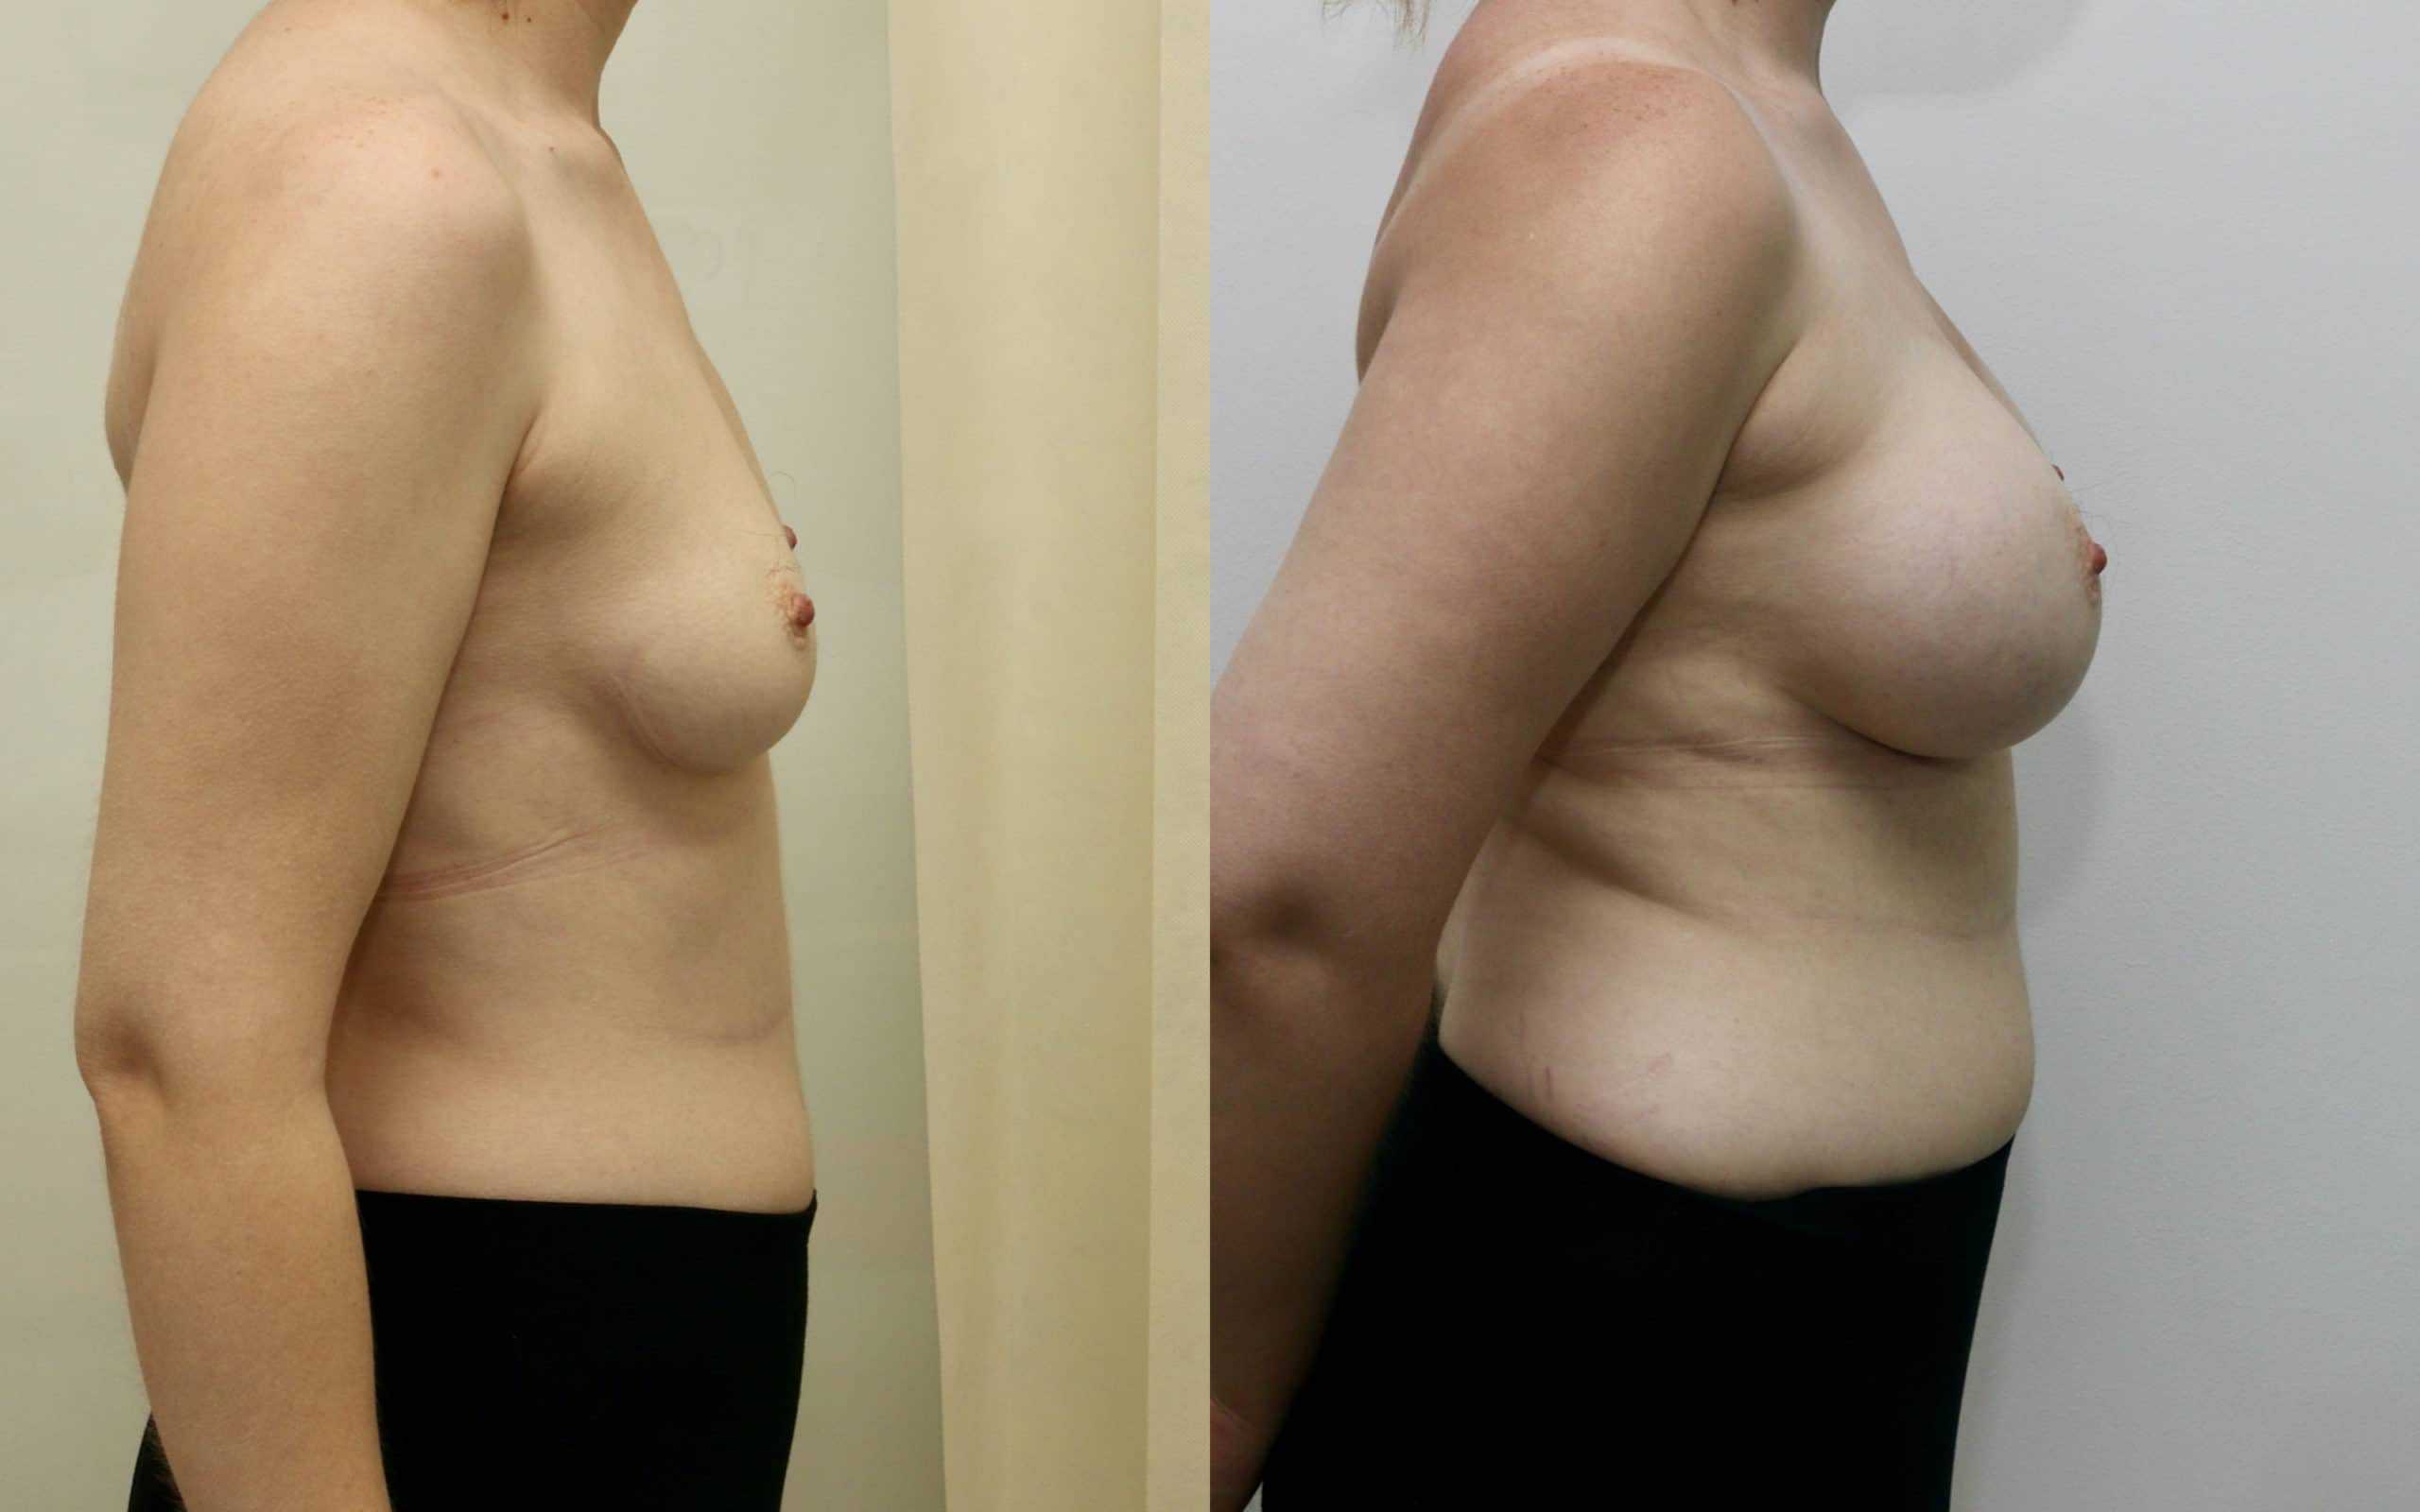 330cc breast implants below the muscle 1.5 years post op